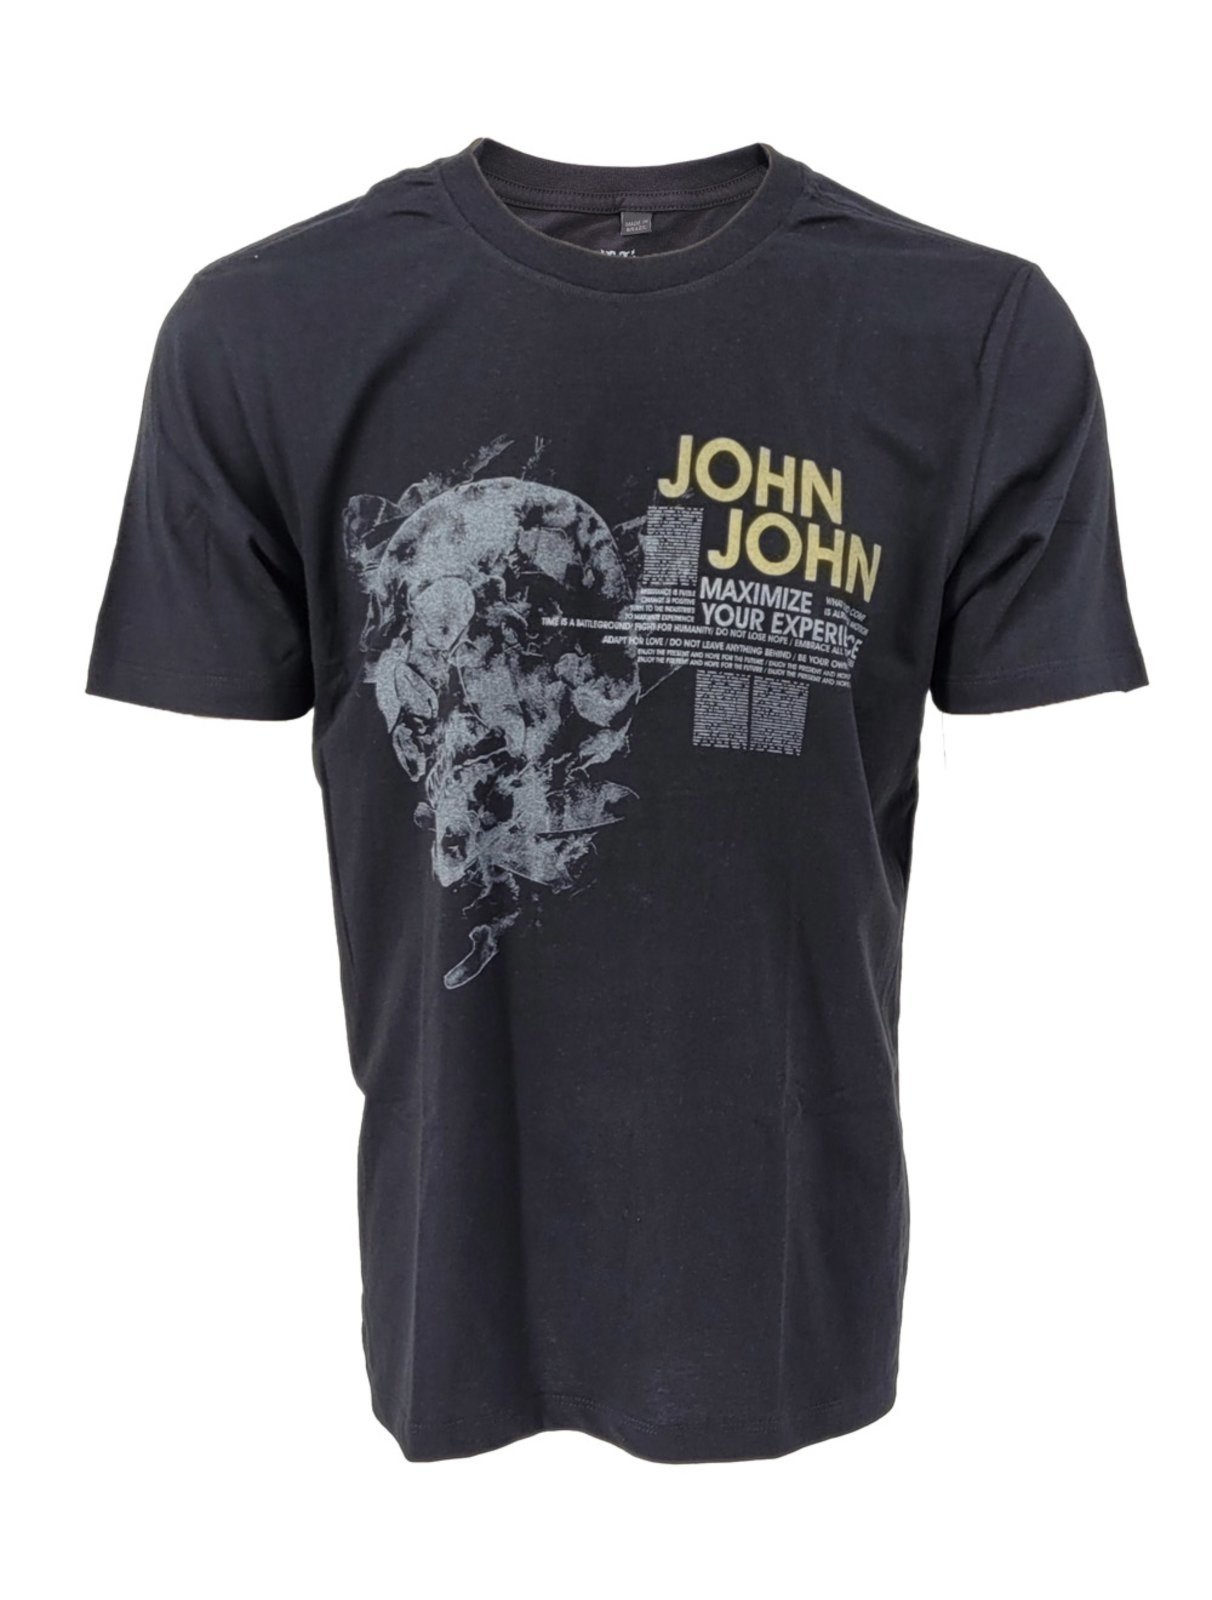 Camiseta John John Masculina Regular Maximize Skull Preta